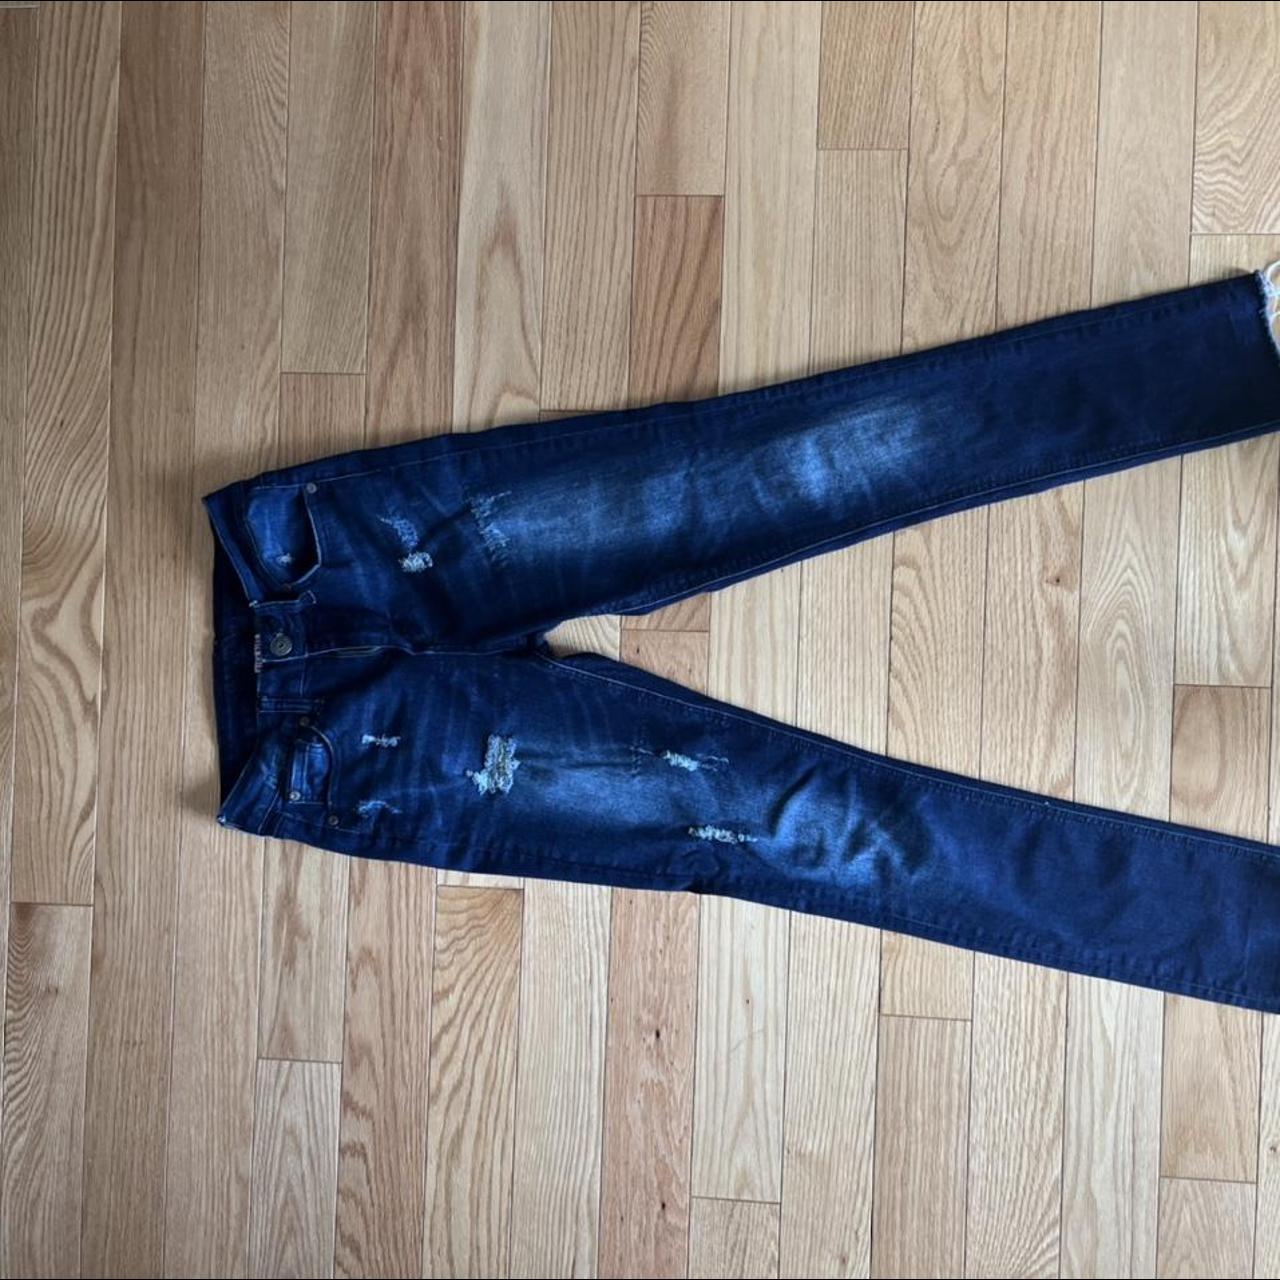 Product Image 1 - Blue Desire denim jeans
HIGH RISE